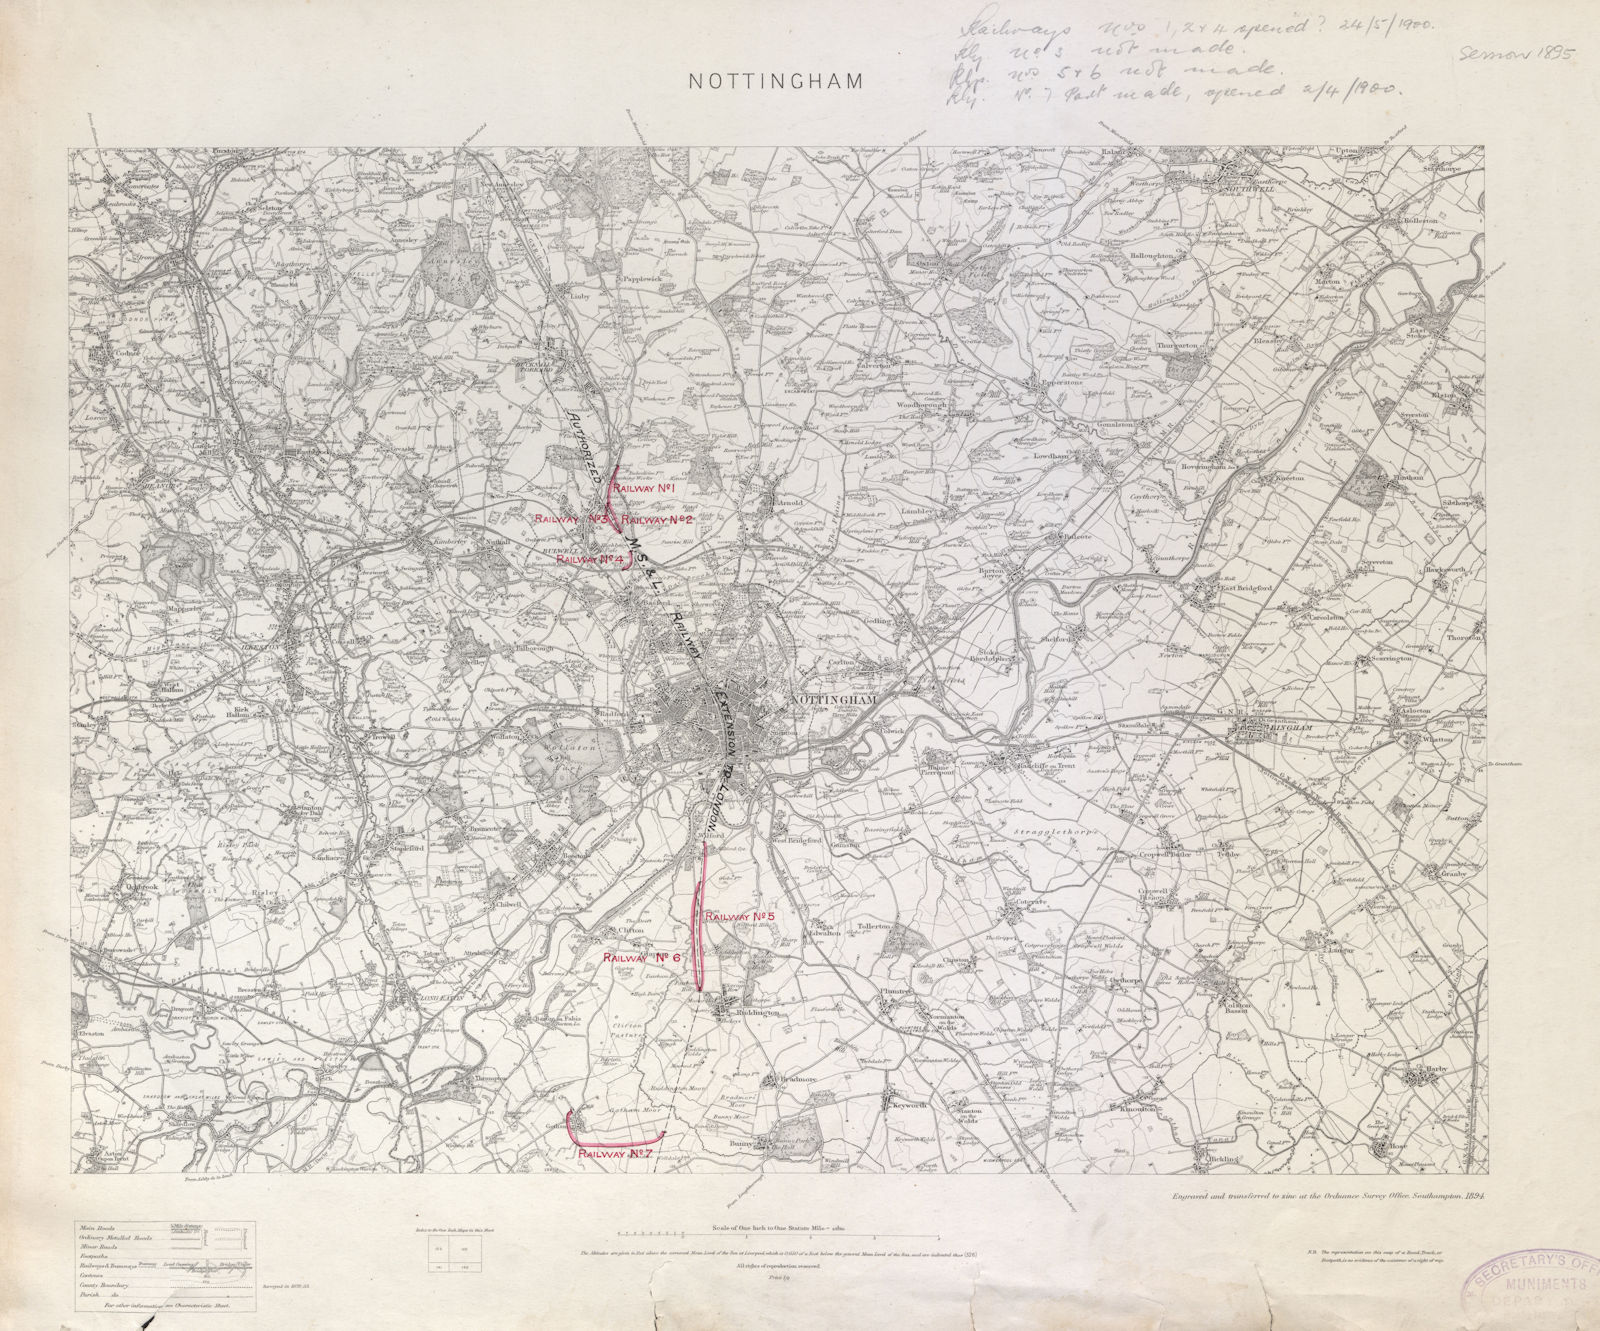 MS&LR/Great Central Railway planning map. Nottingham. ORDNANCE SURVEY 1894